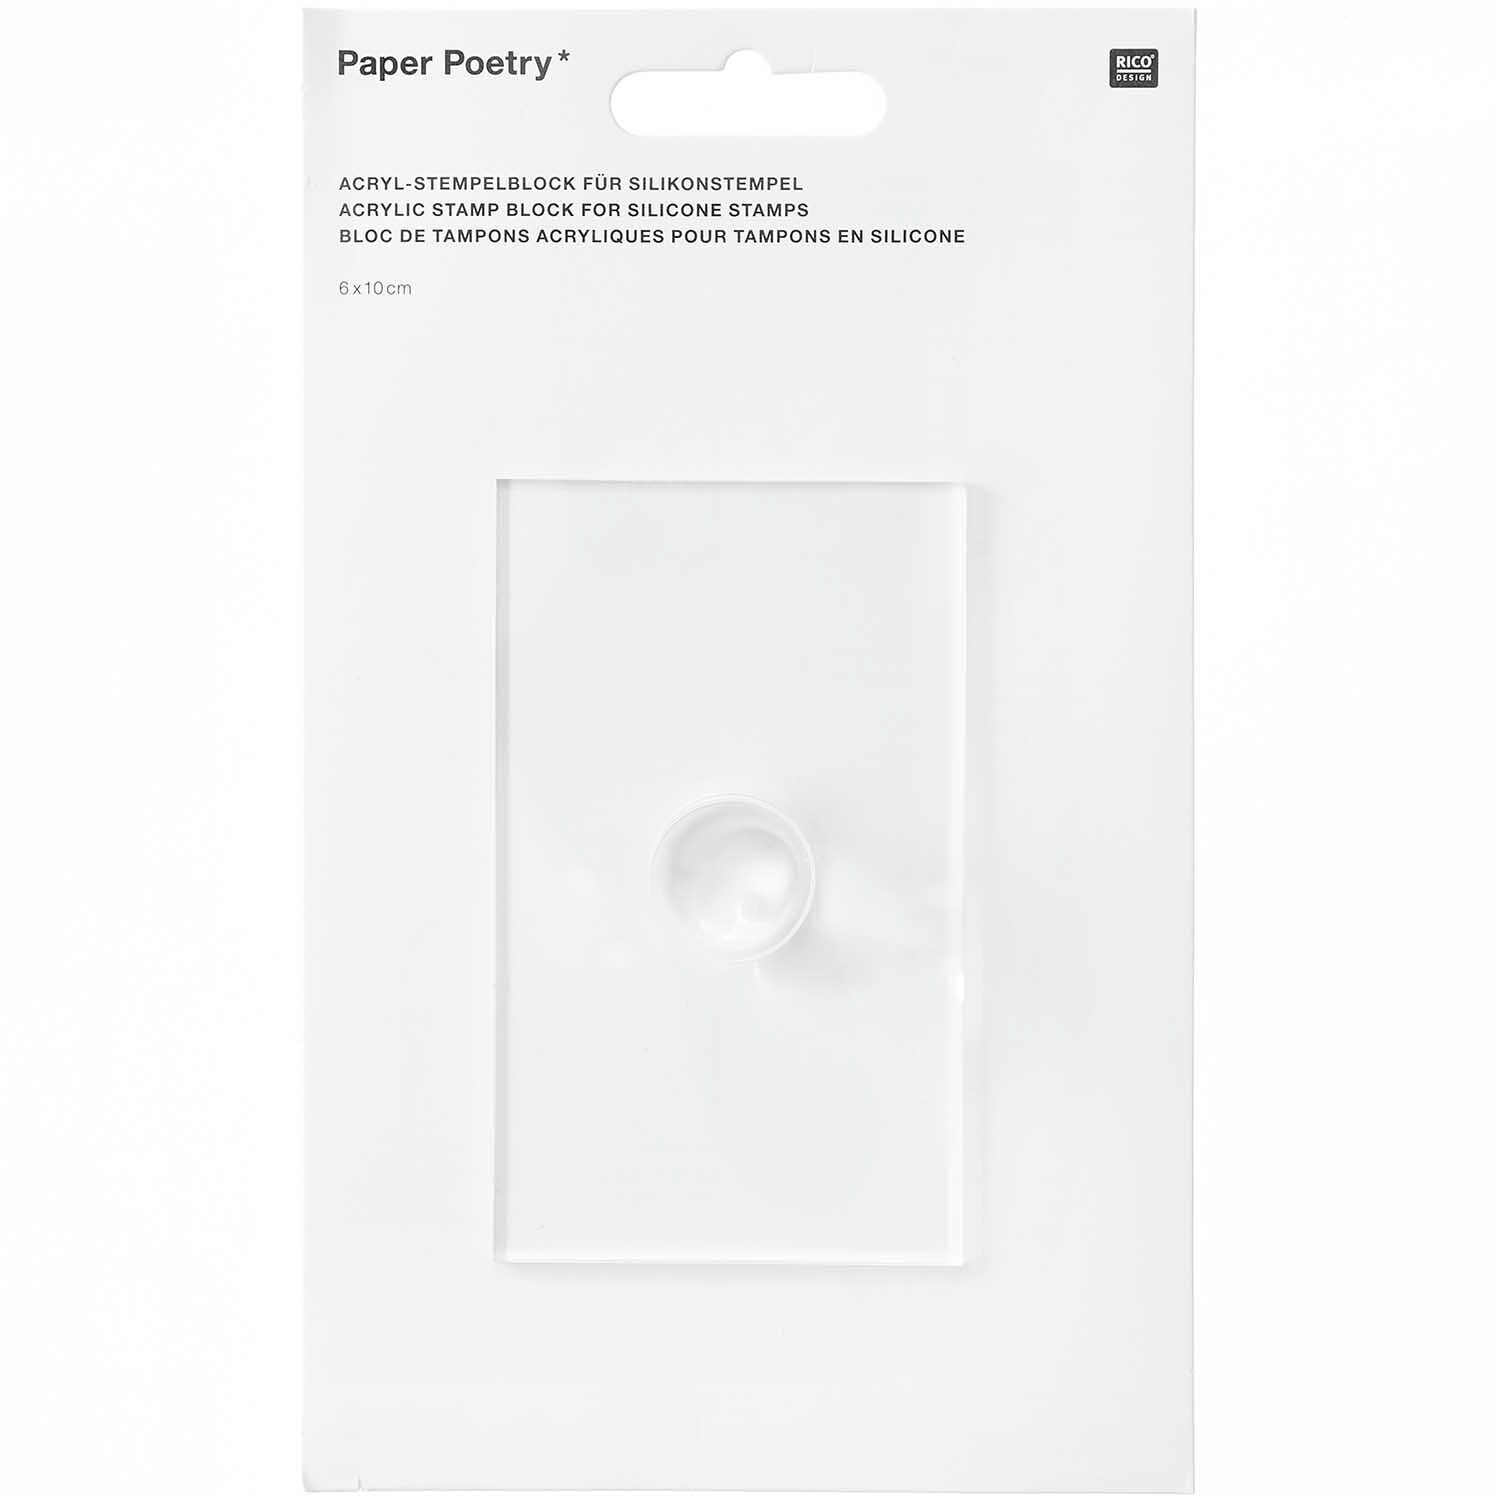 Paper Poetry Acrylblock für Silikonstempel 6x10cm